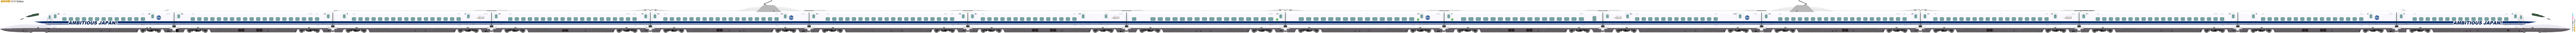 [9011] Central Japan Railway 52287923564_bdf517e8bf_o